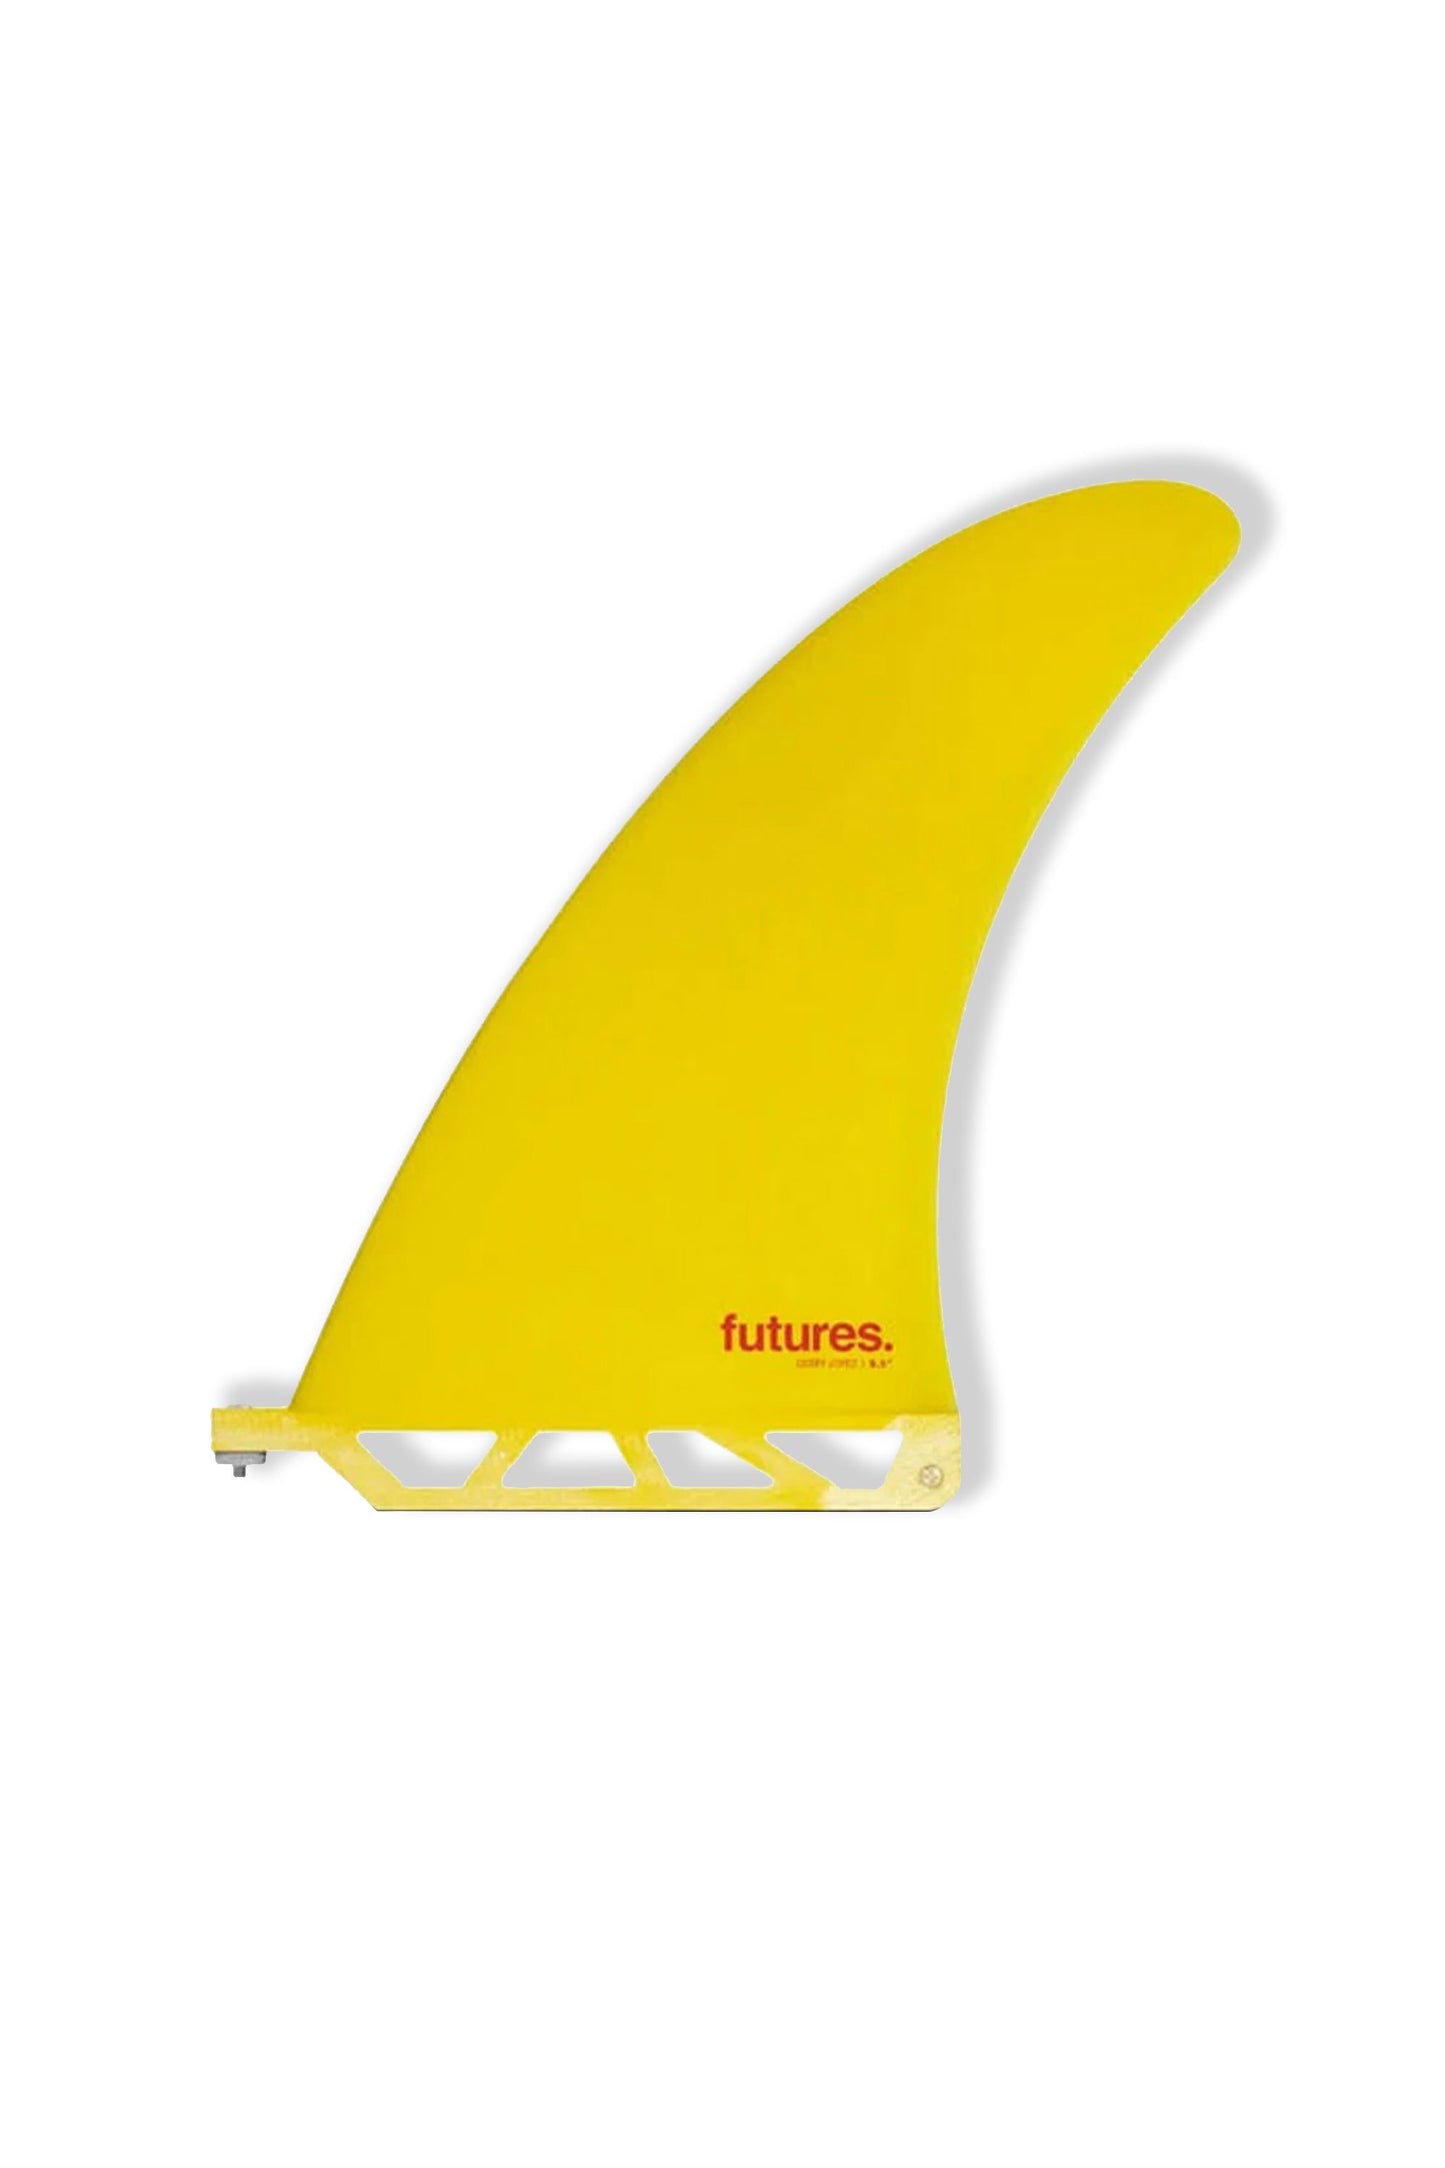 Pukas-Surf-Shop-Futures-Fins-Gerry-Lopez-8-5-yellow